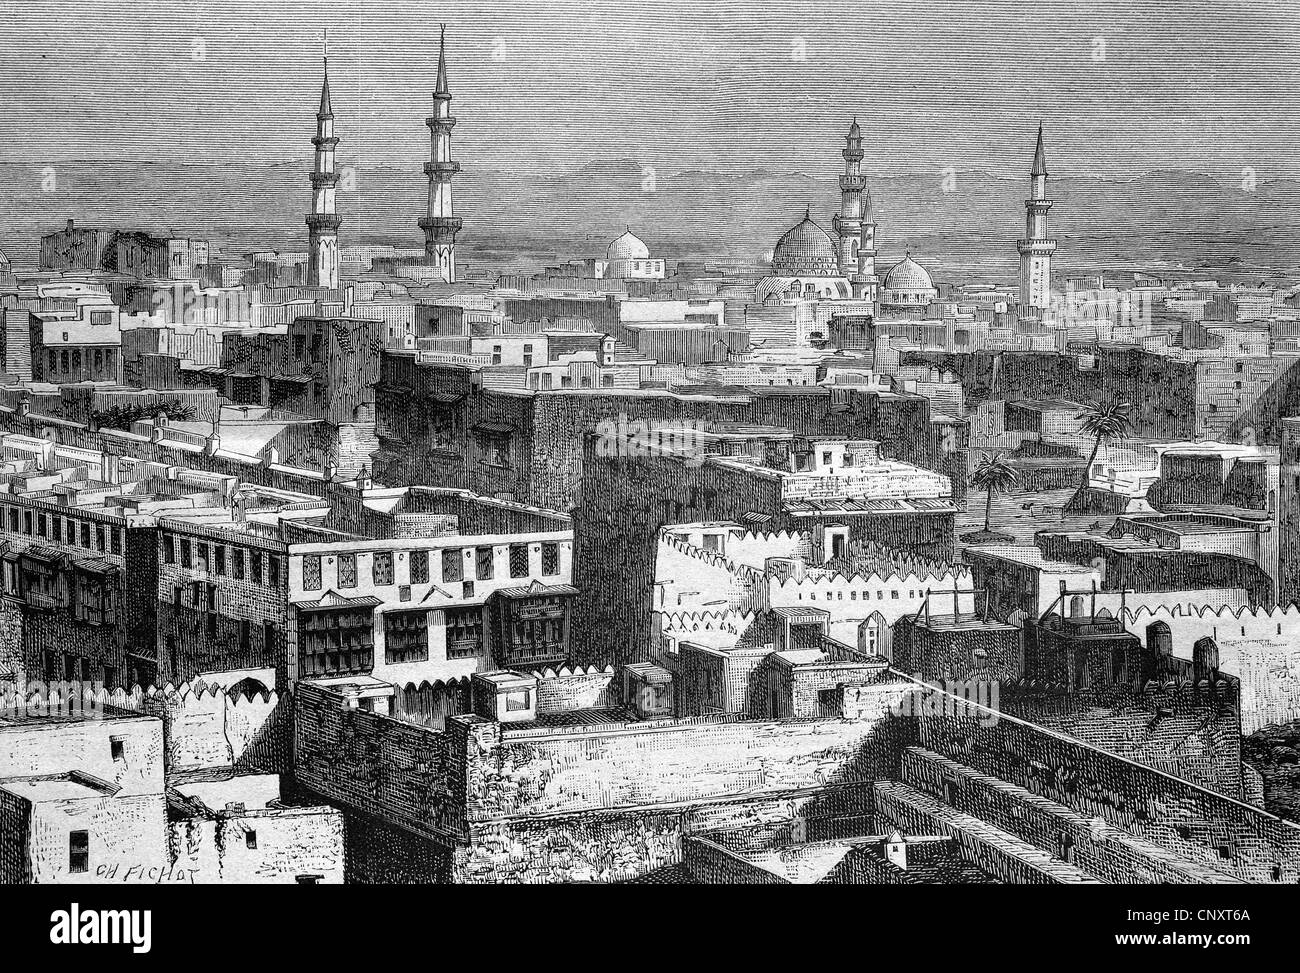 Pilgrimage city of Medina in Arabia, historical engraving, 1888 Stock Photo